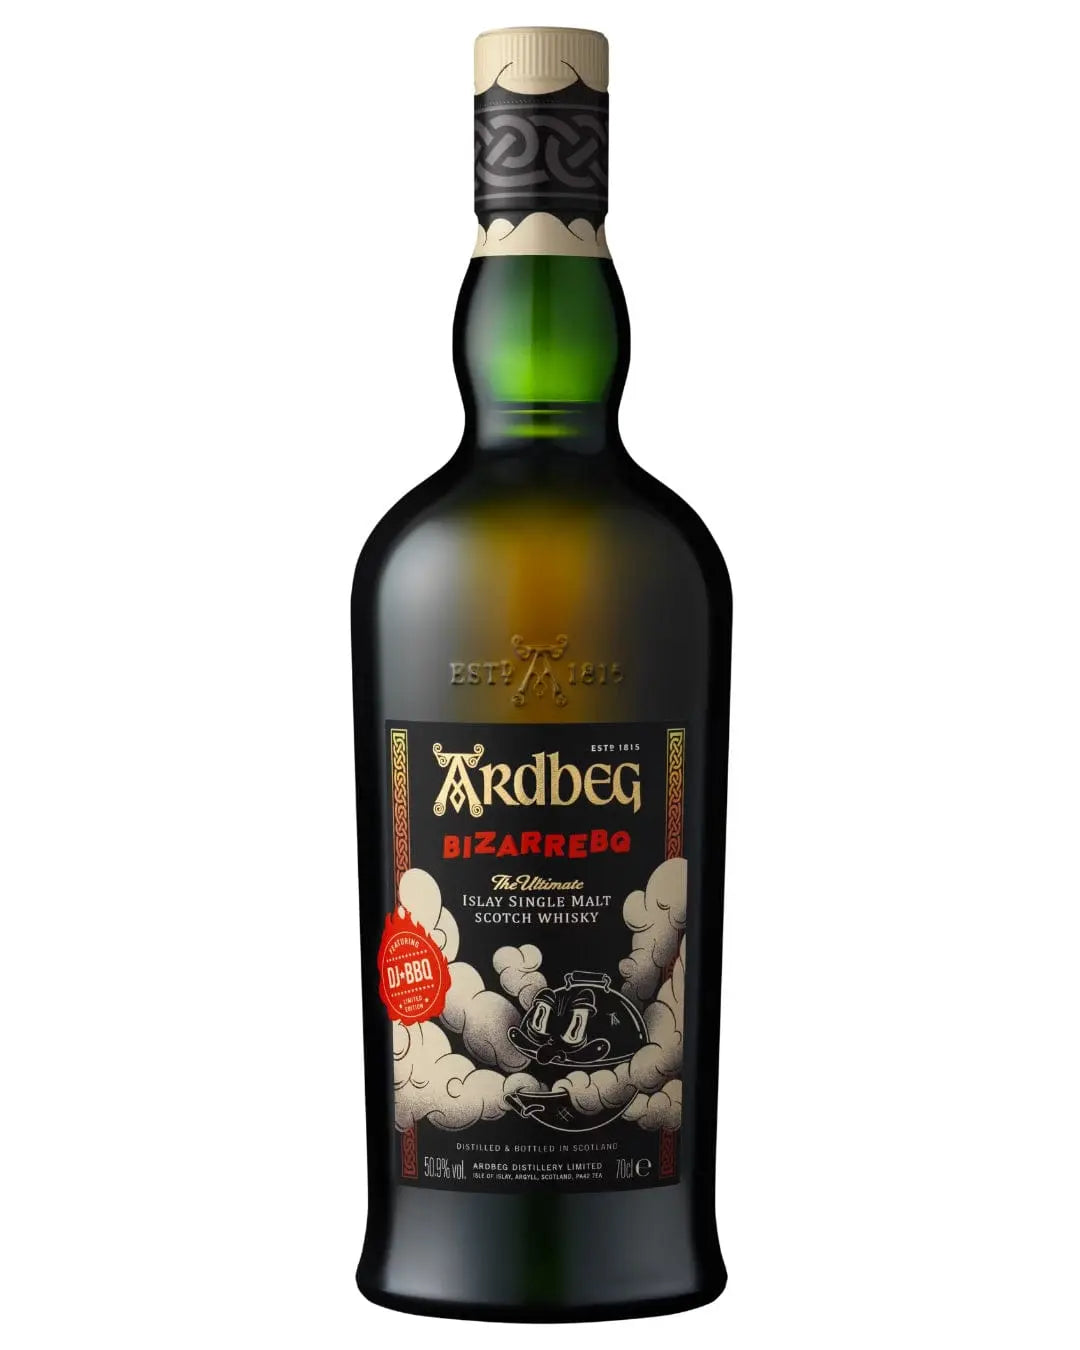 Ardbeg BizarreBQ Limited Edition Single Malt Scotch Whisky, 70 cl Whisky